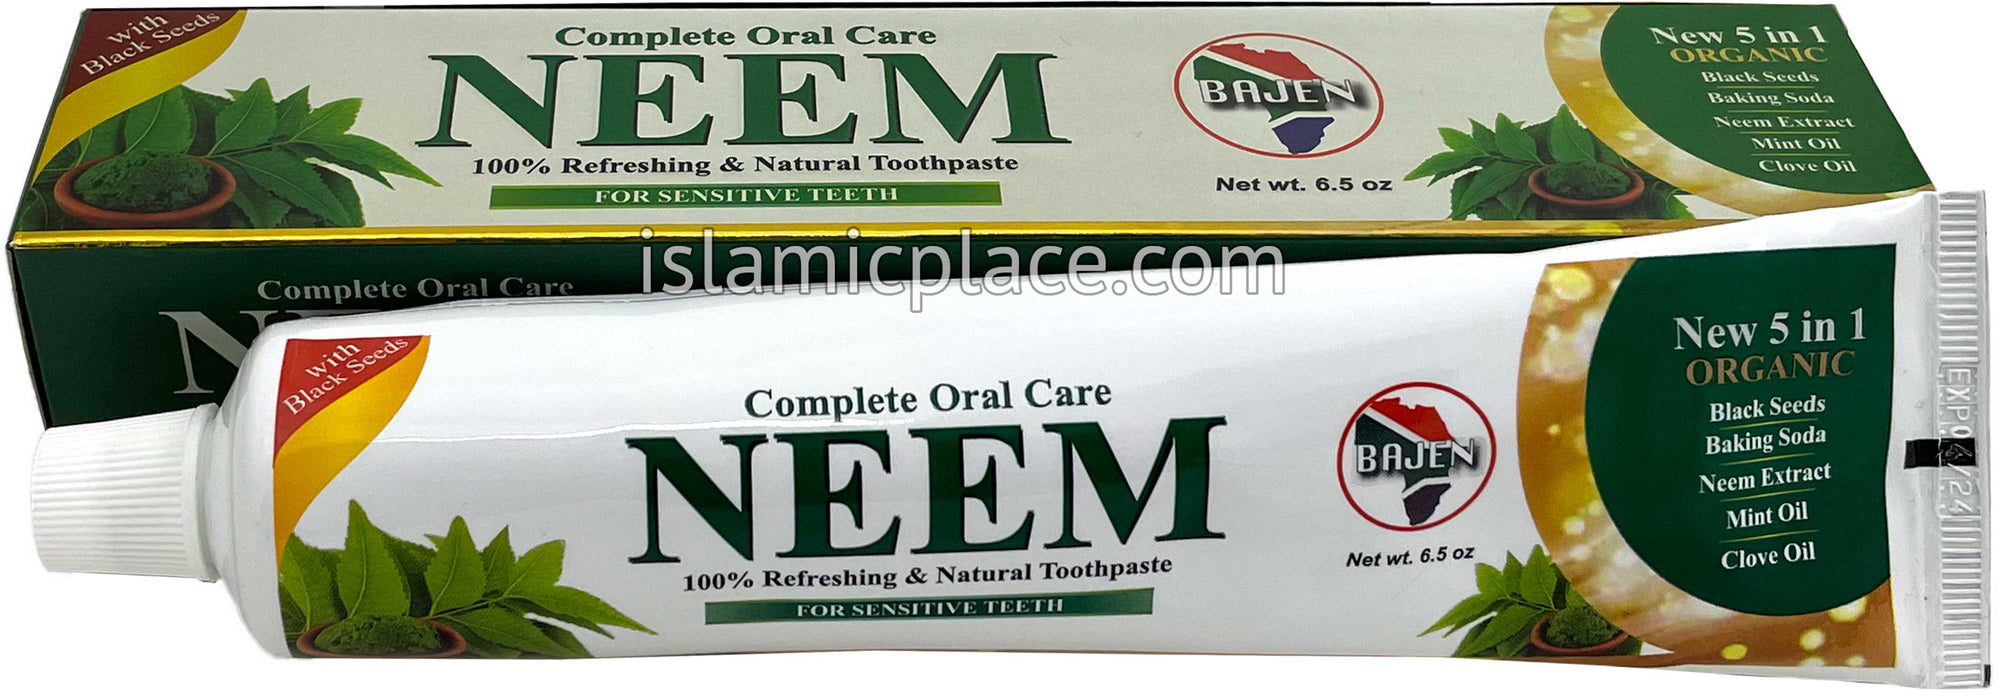 Neem Toothpaste - 5 in 1 (Black Seed, Baking Soda, Neem Extract, Mint Oil, Clove Oil) 6.5 oz - Halal & Organic